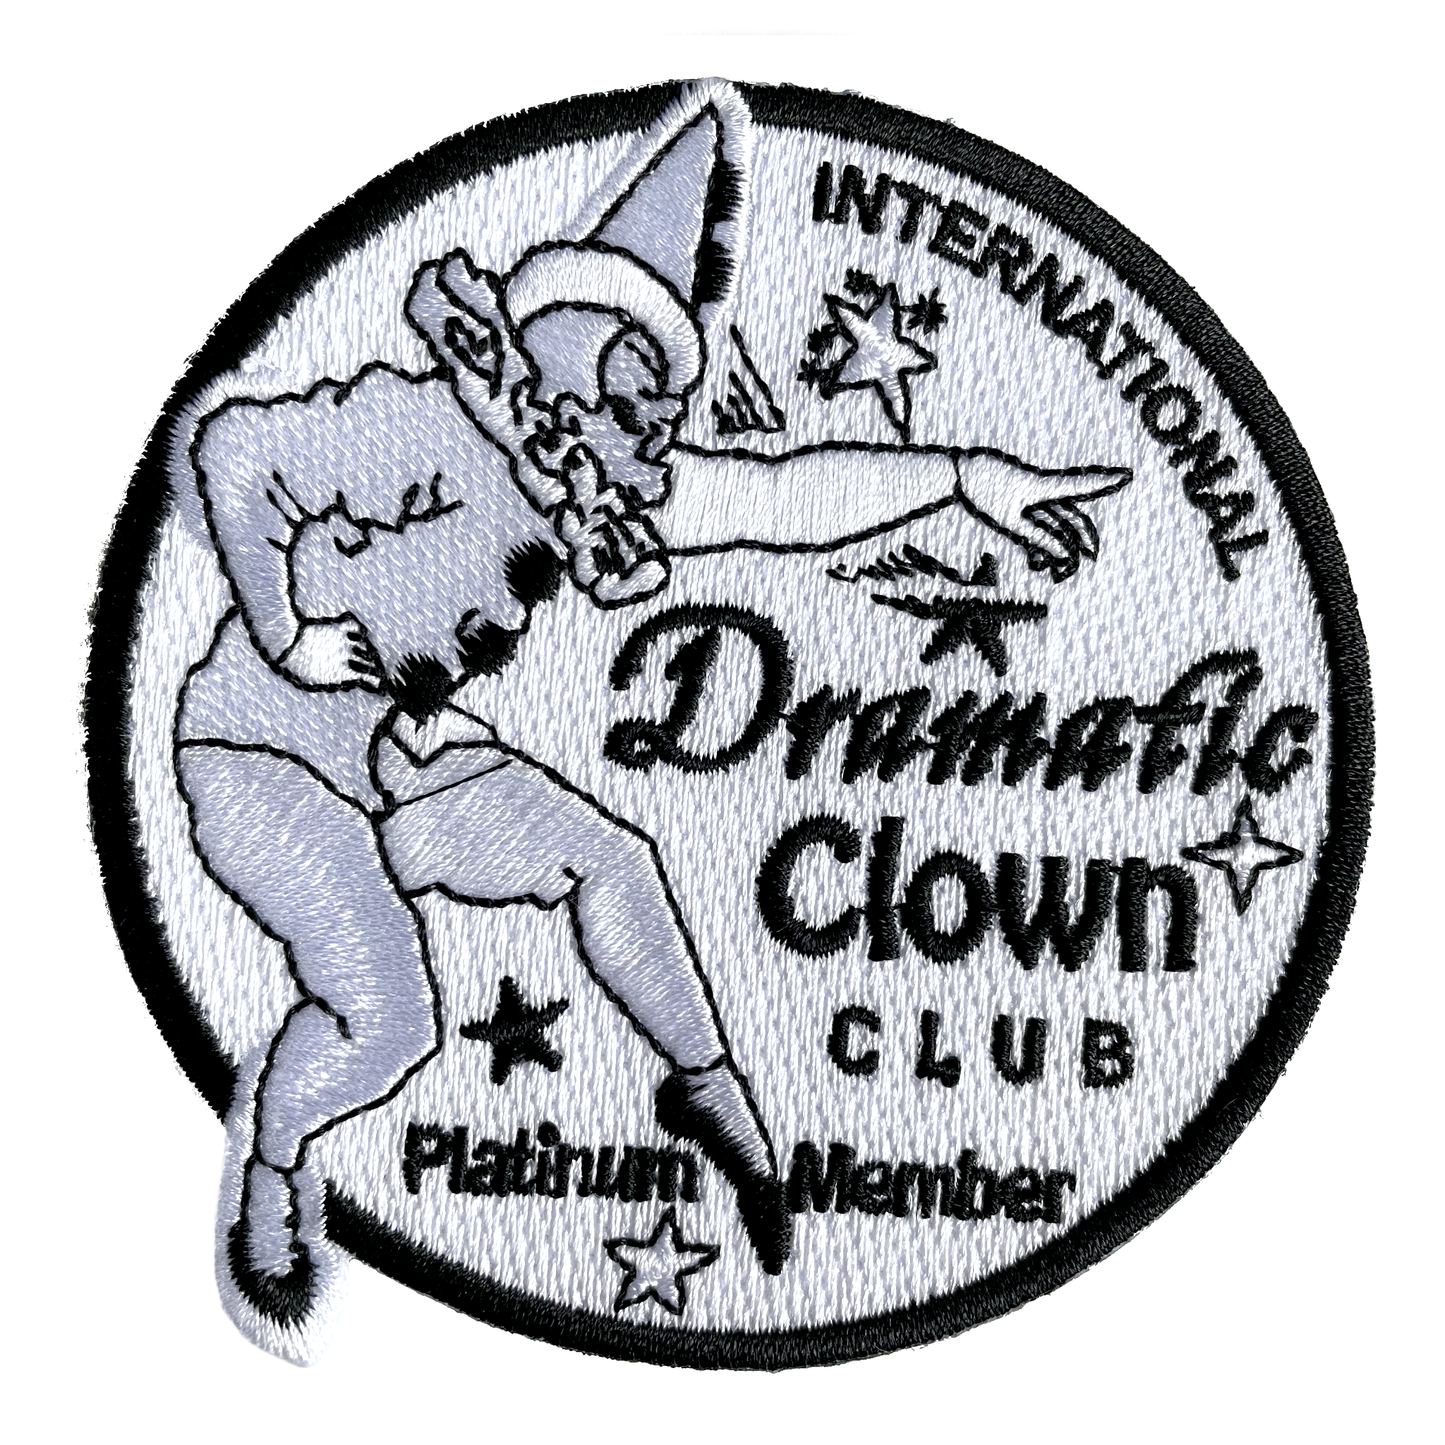 "Dramatic Clown" Patch